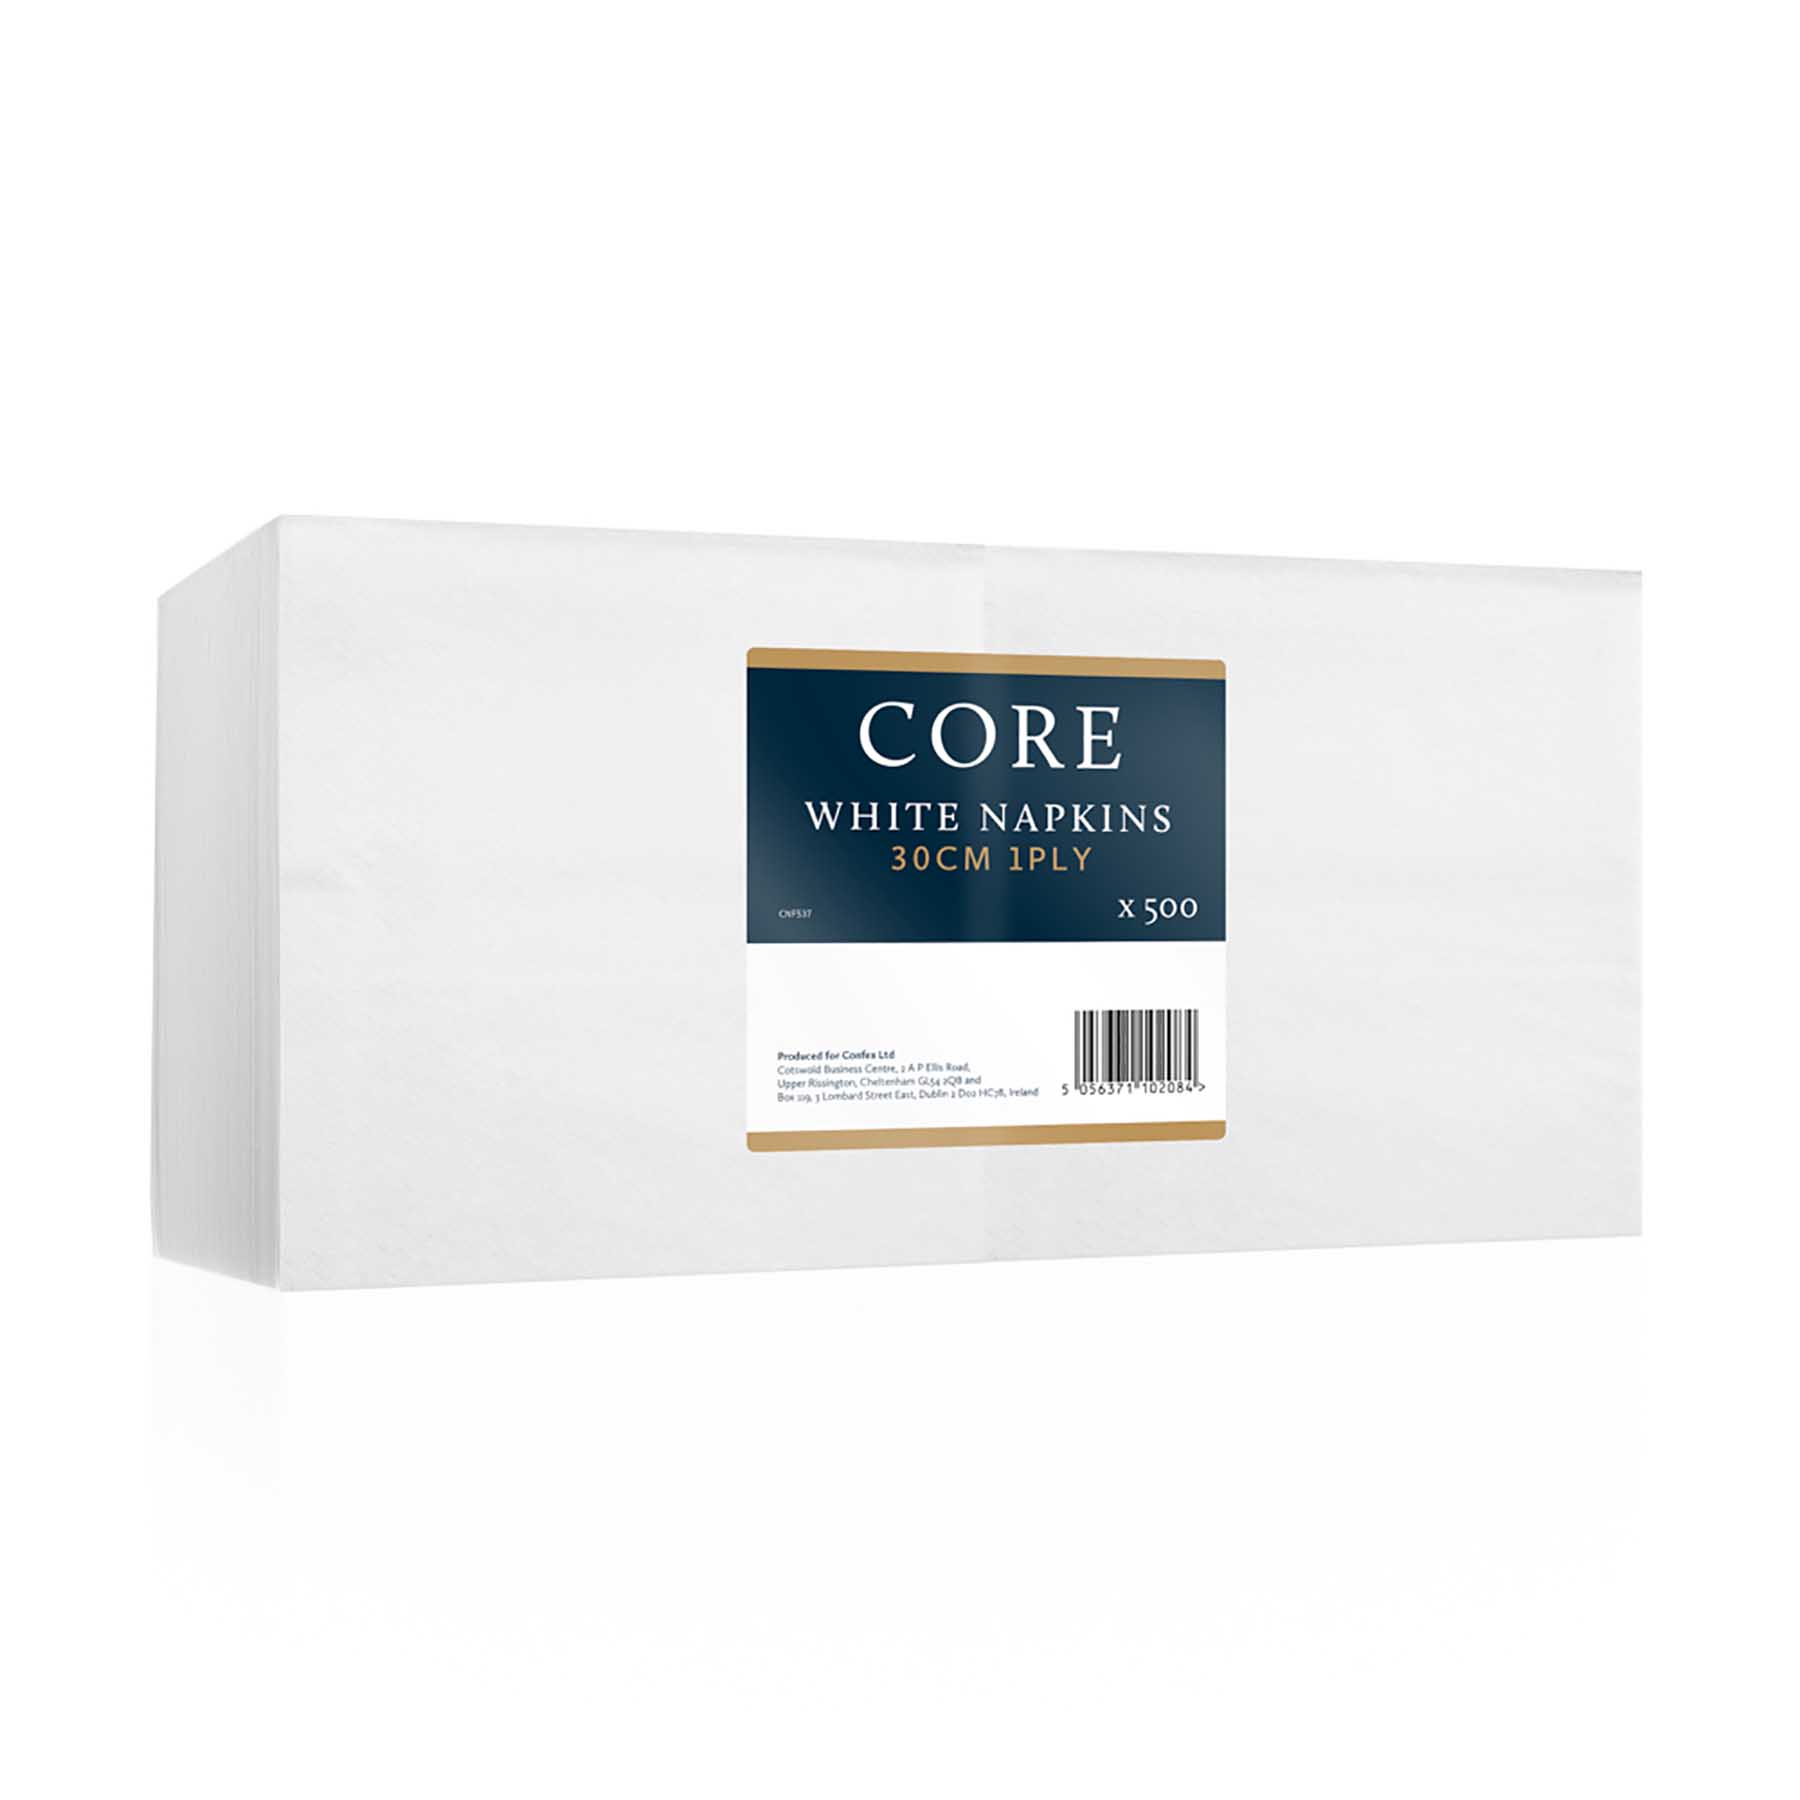 Core 30cm 1Ply White Napkins x 500